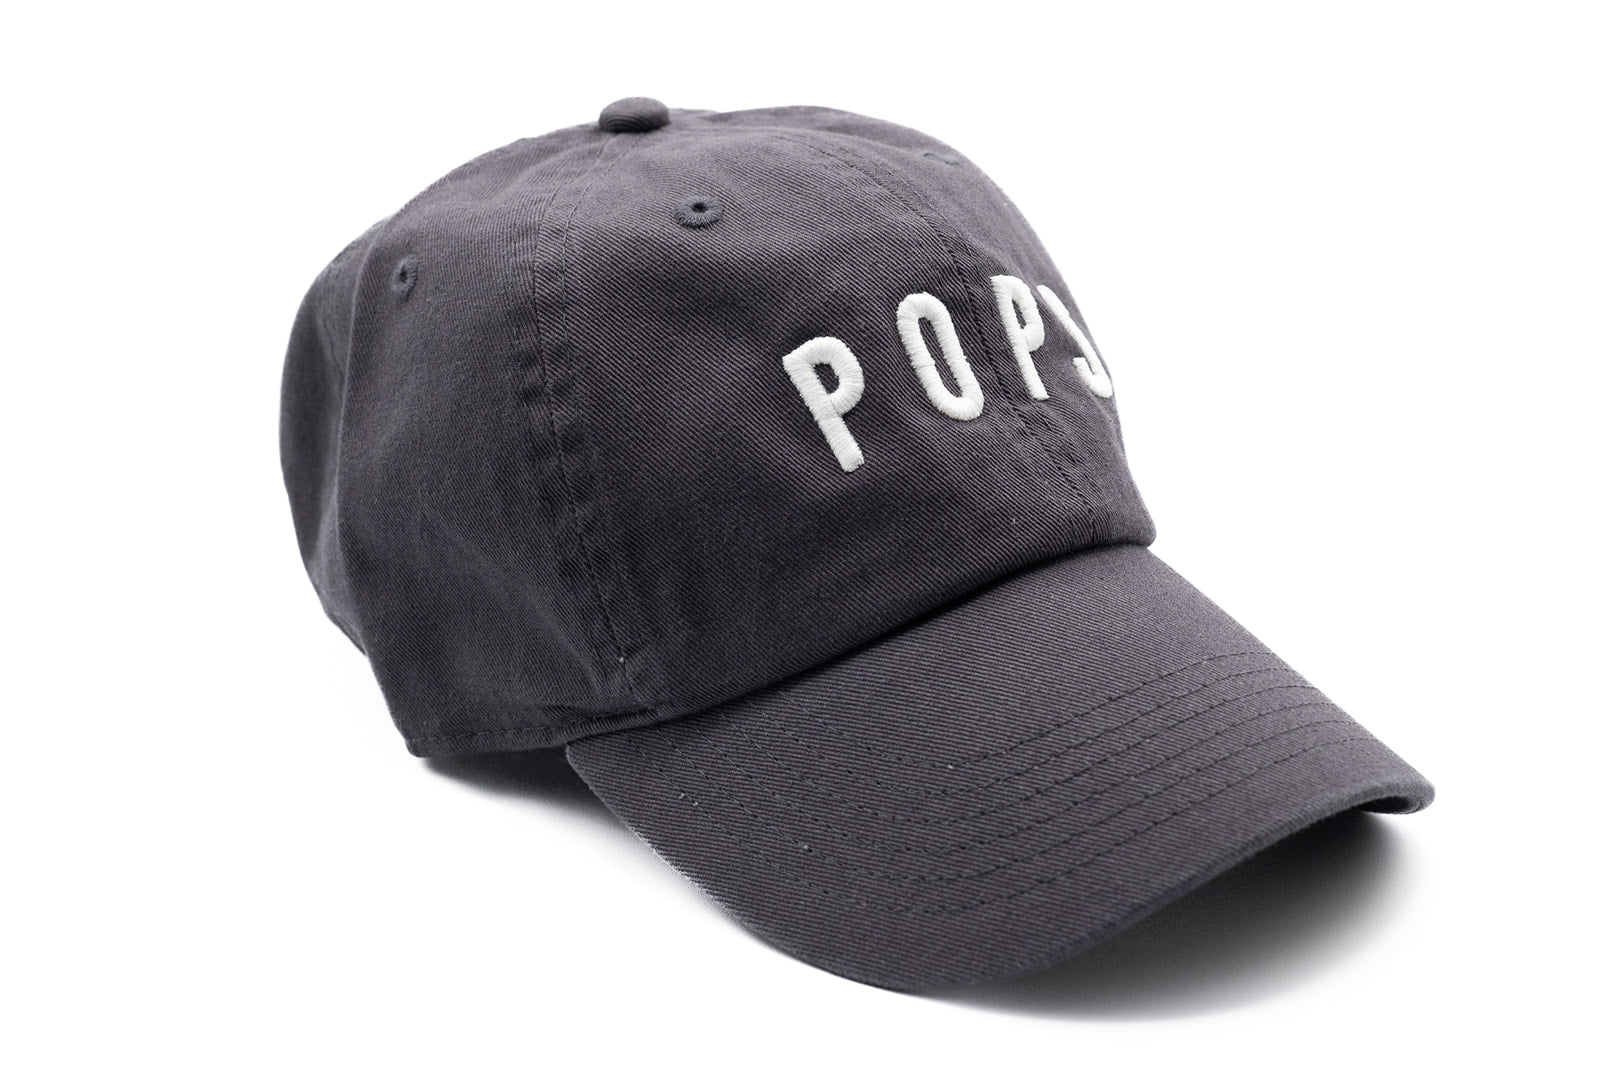 Charcoal Pops Hat